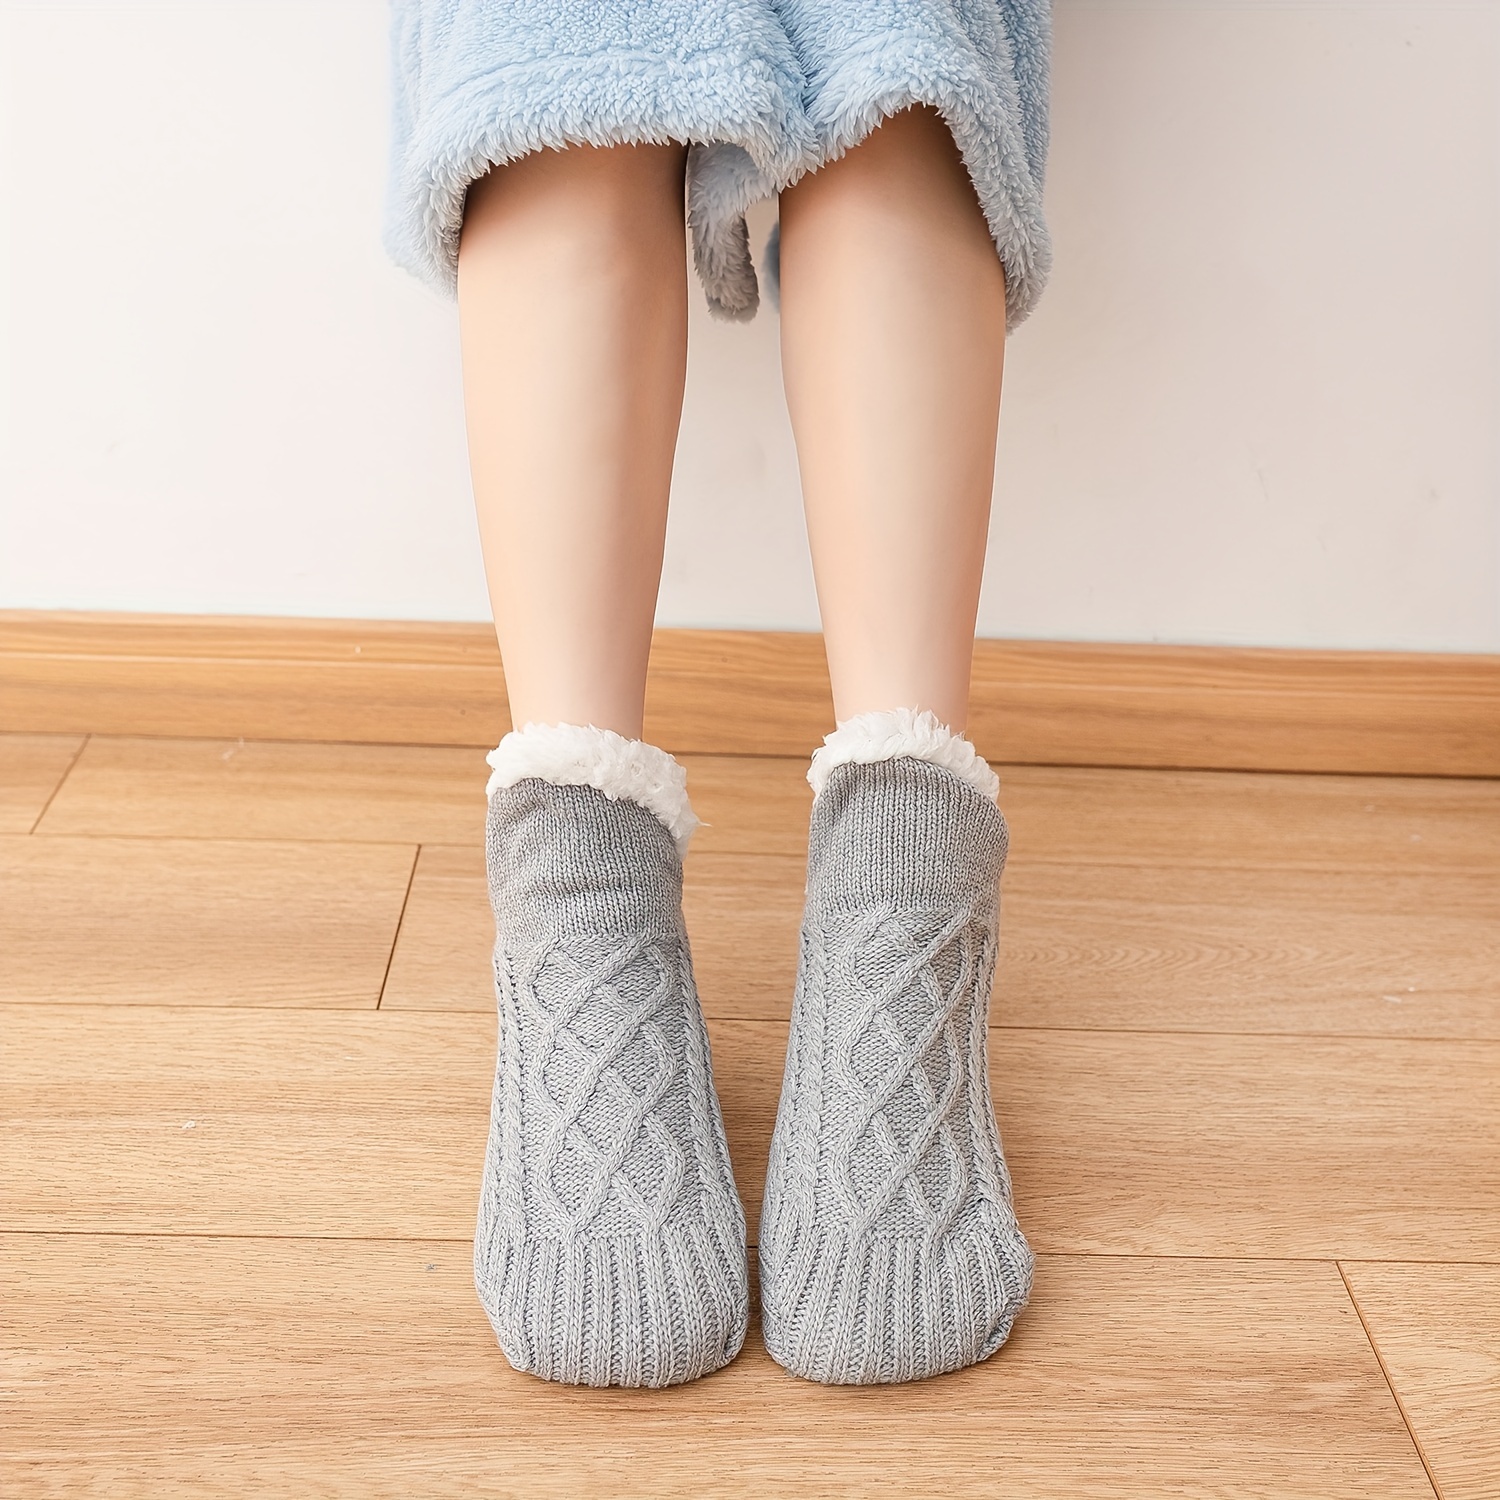 Ladies thermal low cut wool non slip slipper socks